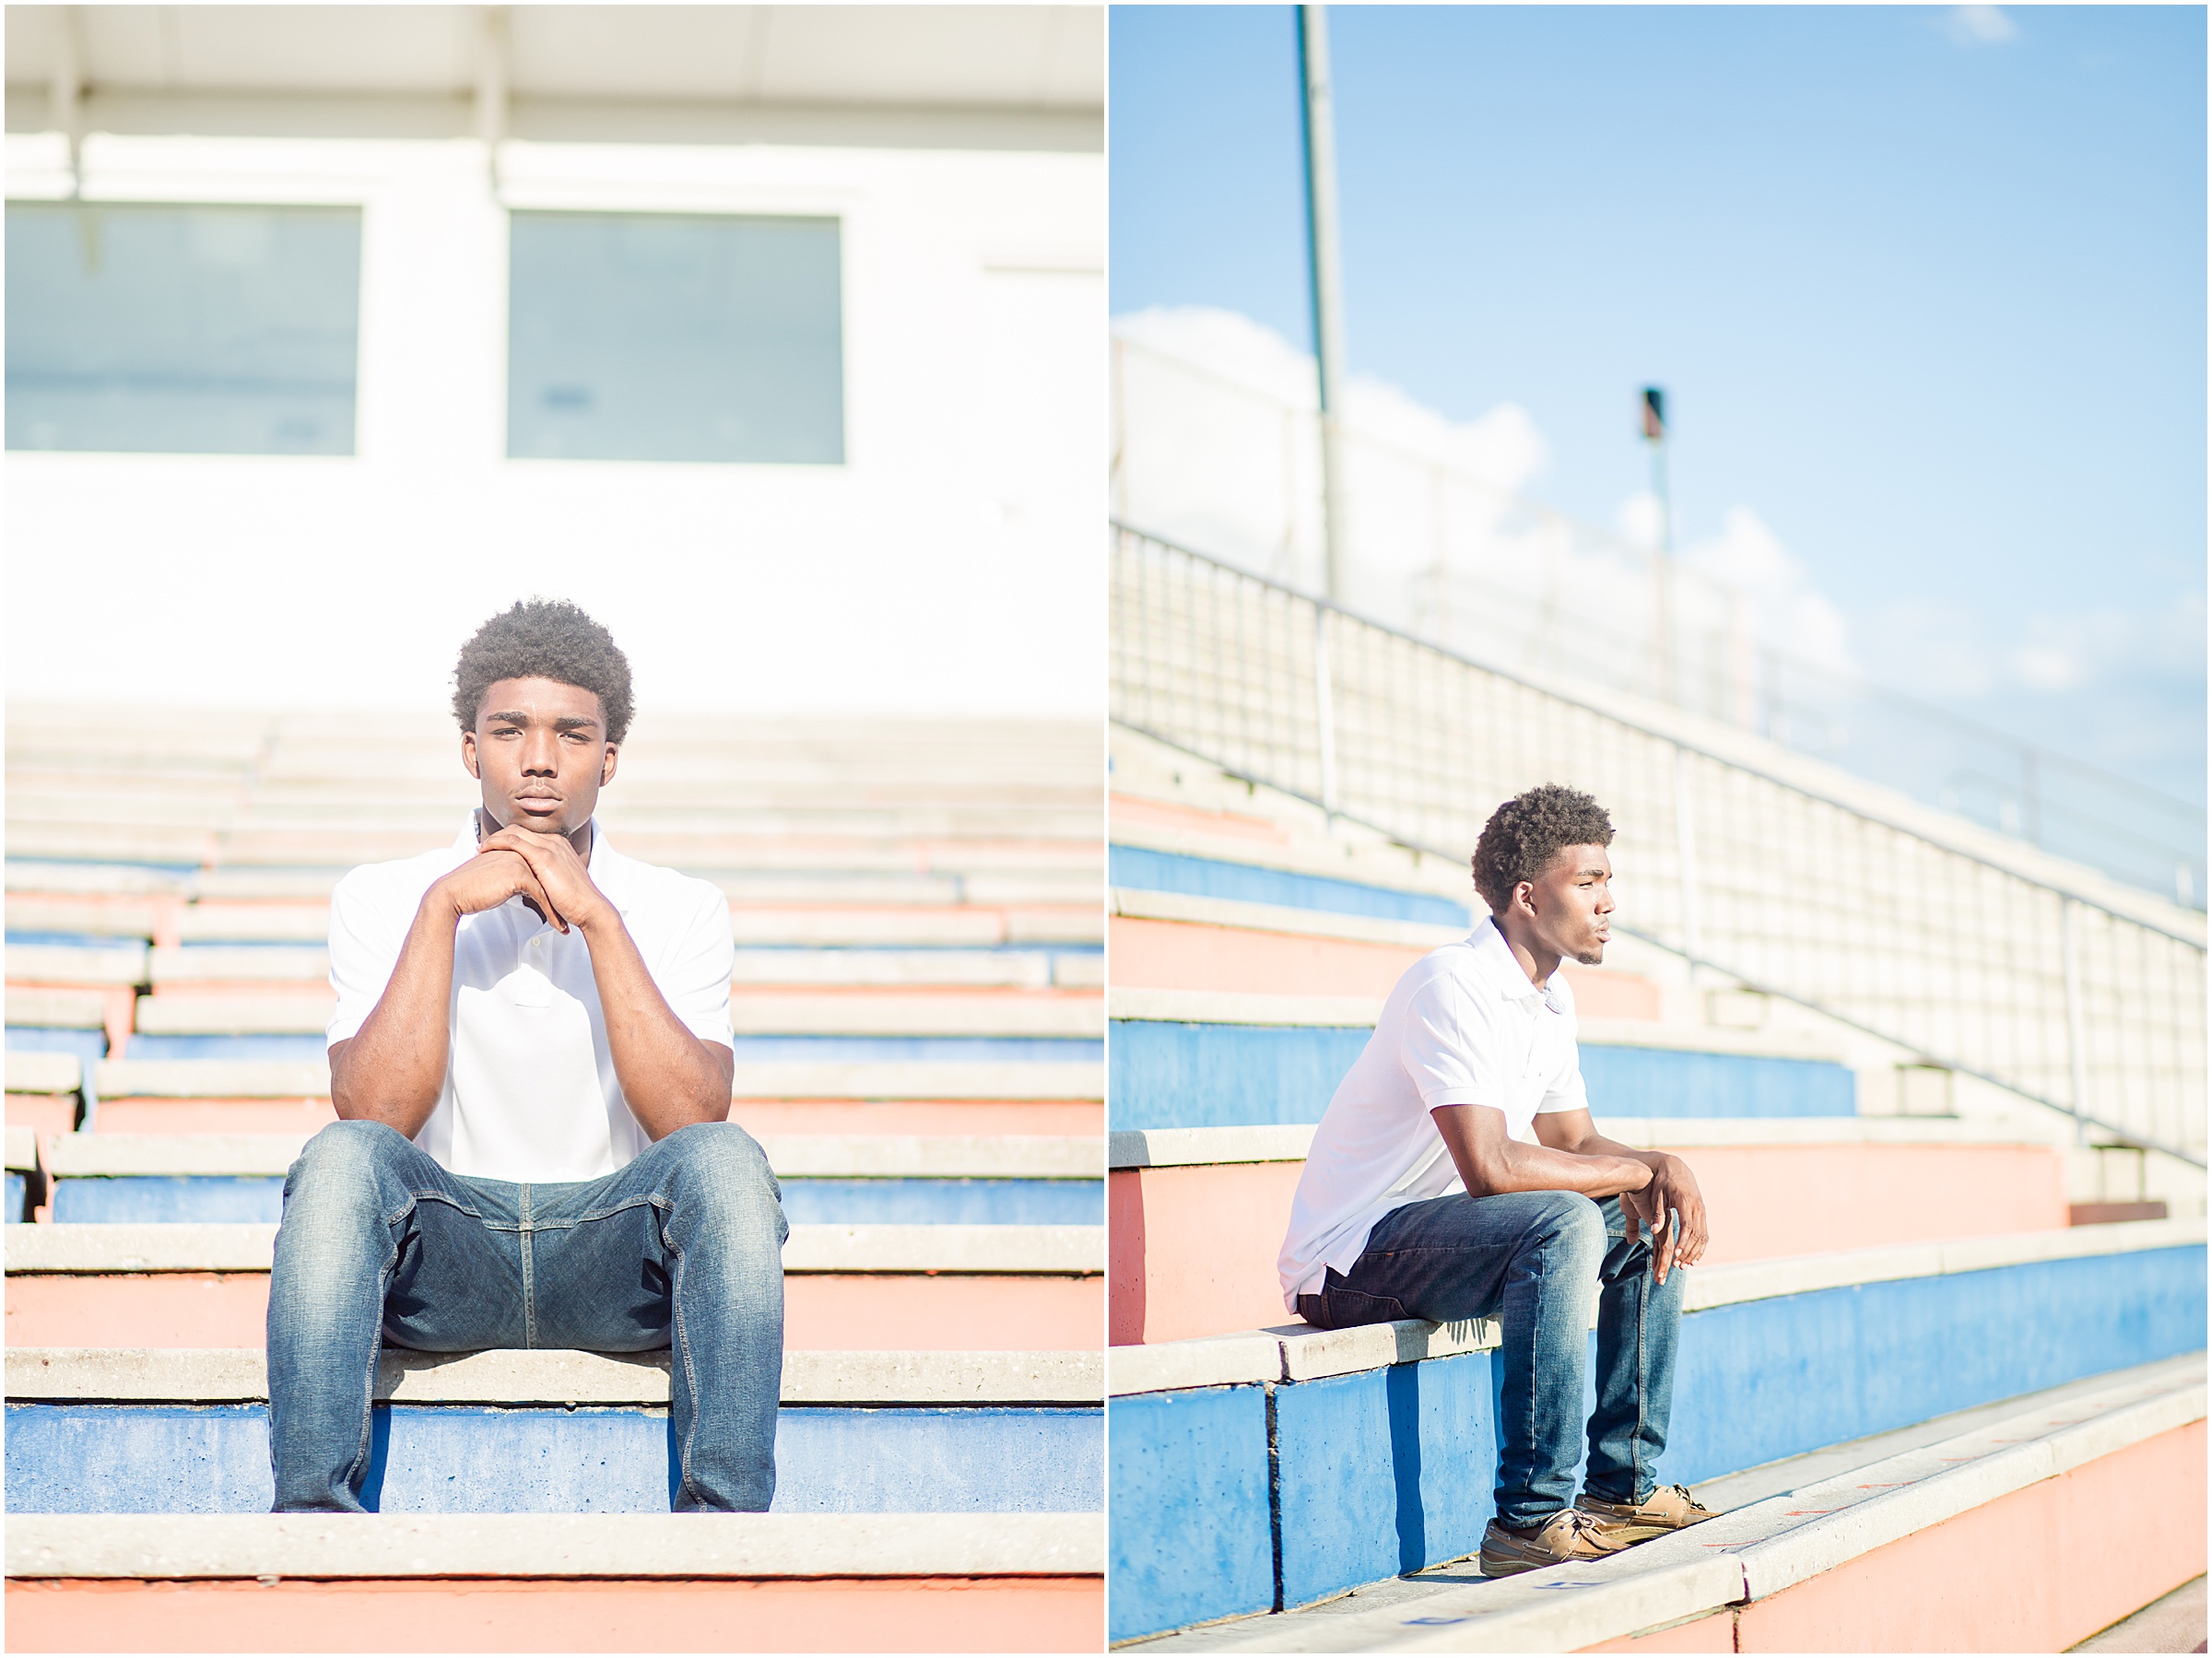 Hardee High School Football Player, Randy McLeod takes Senior photos in Wauchula, Florida.